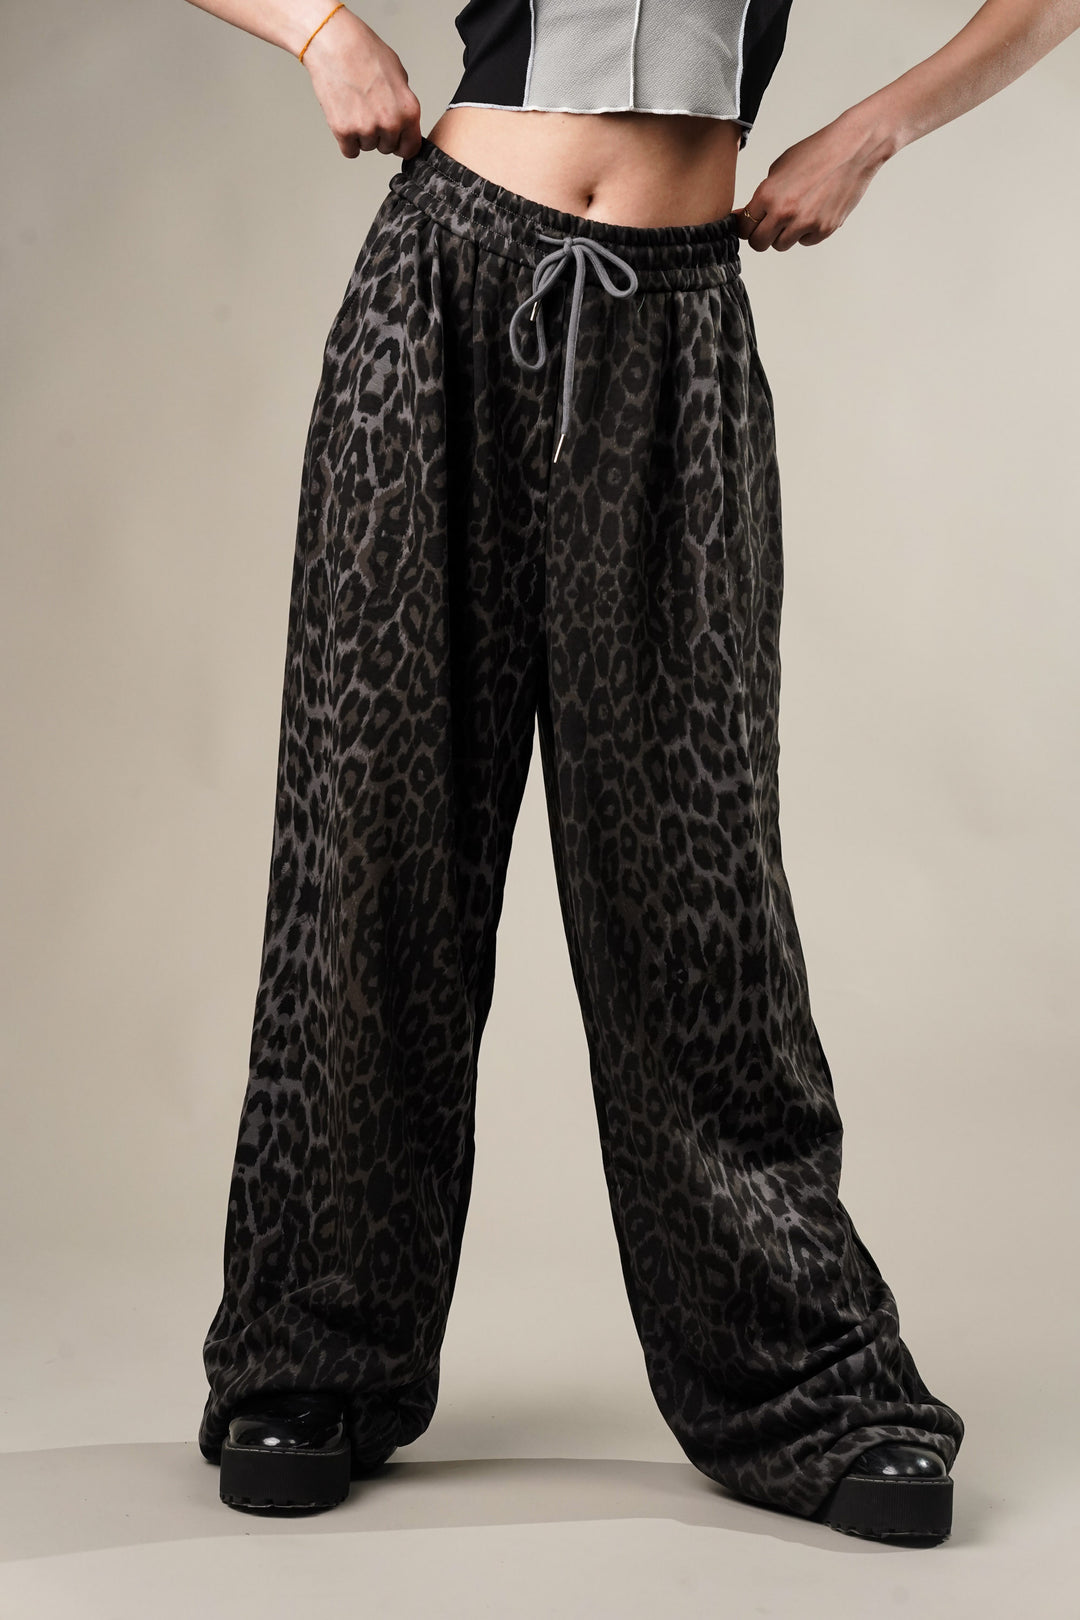 Shop Thundercat Wide leg Sweatpants for women